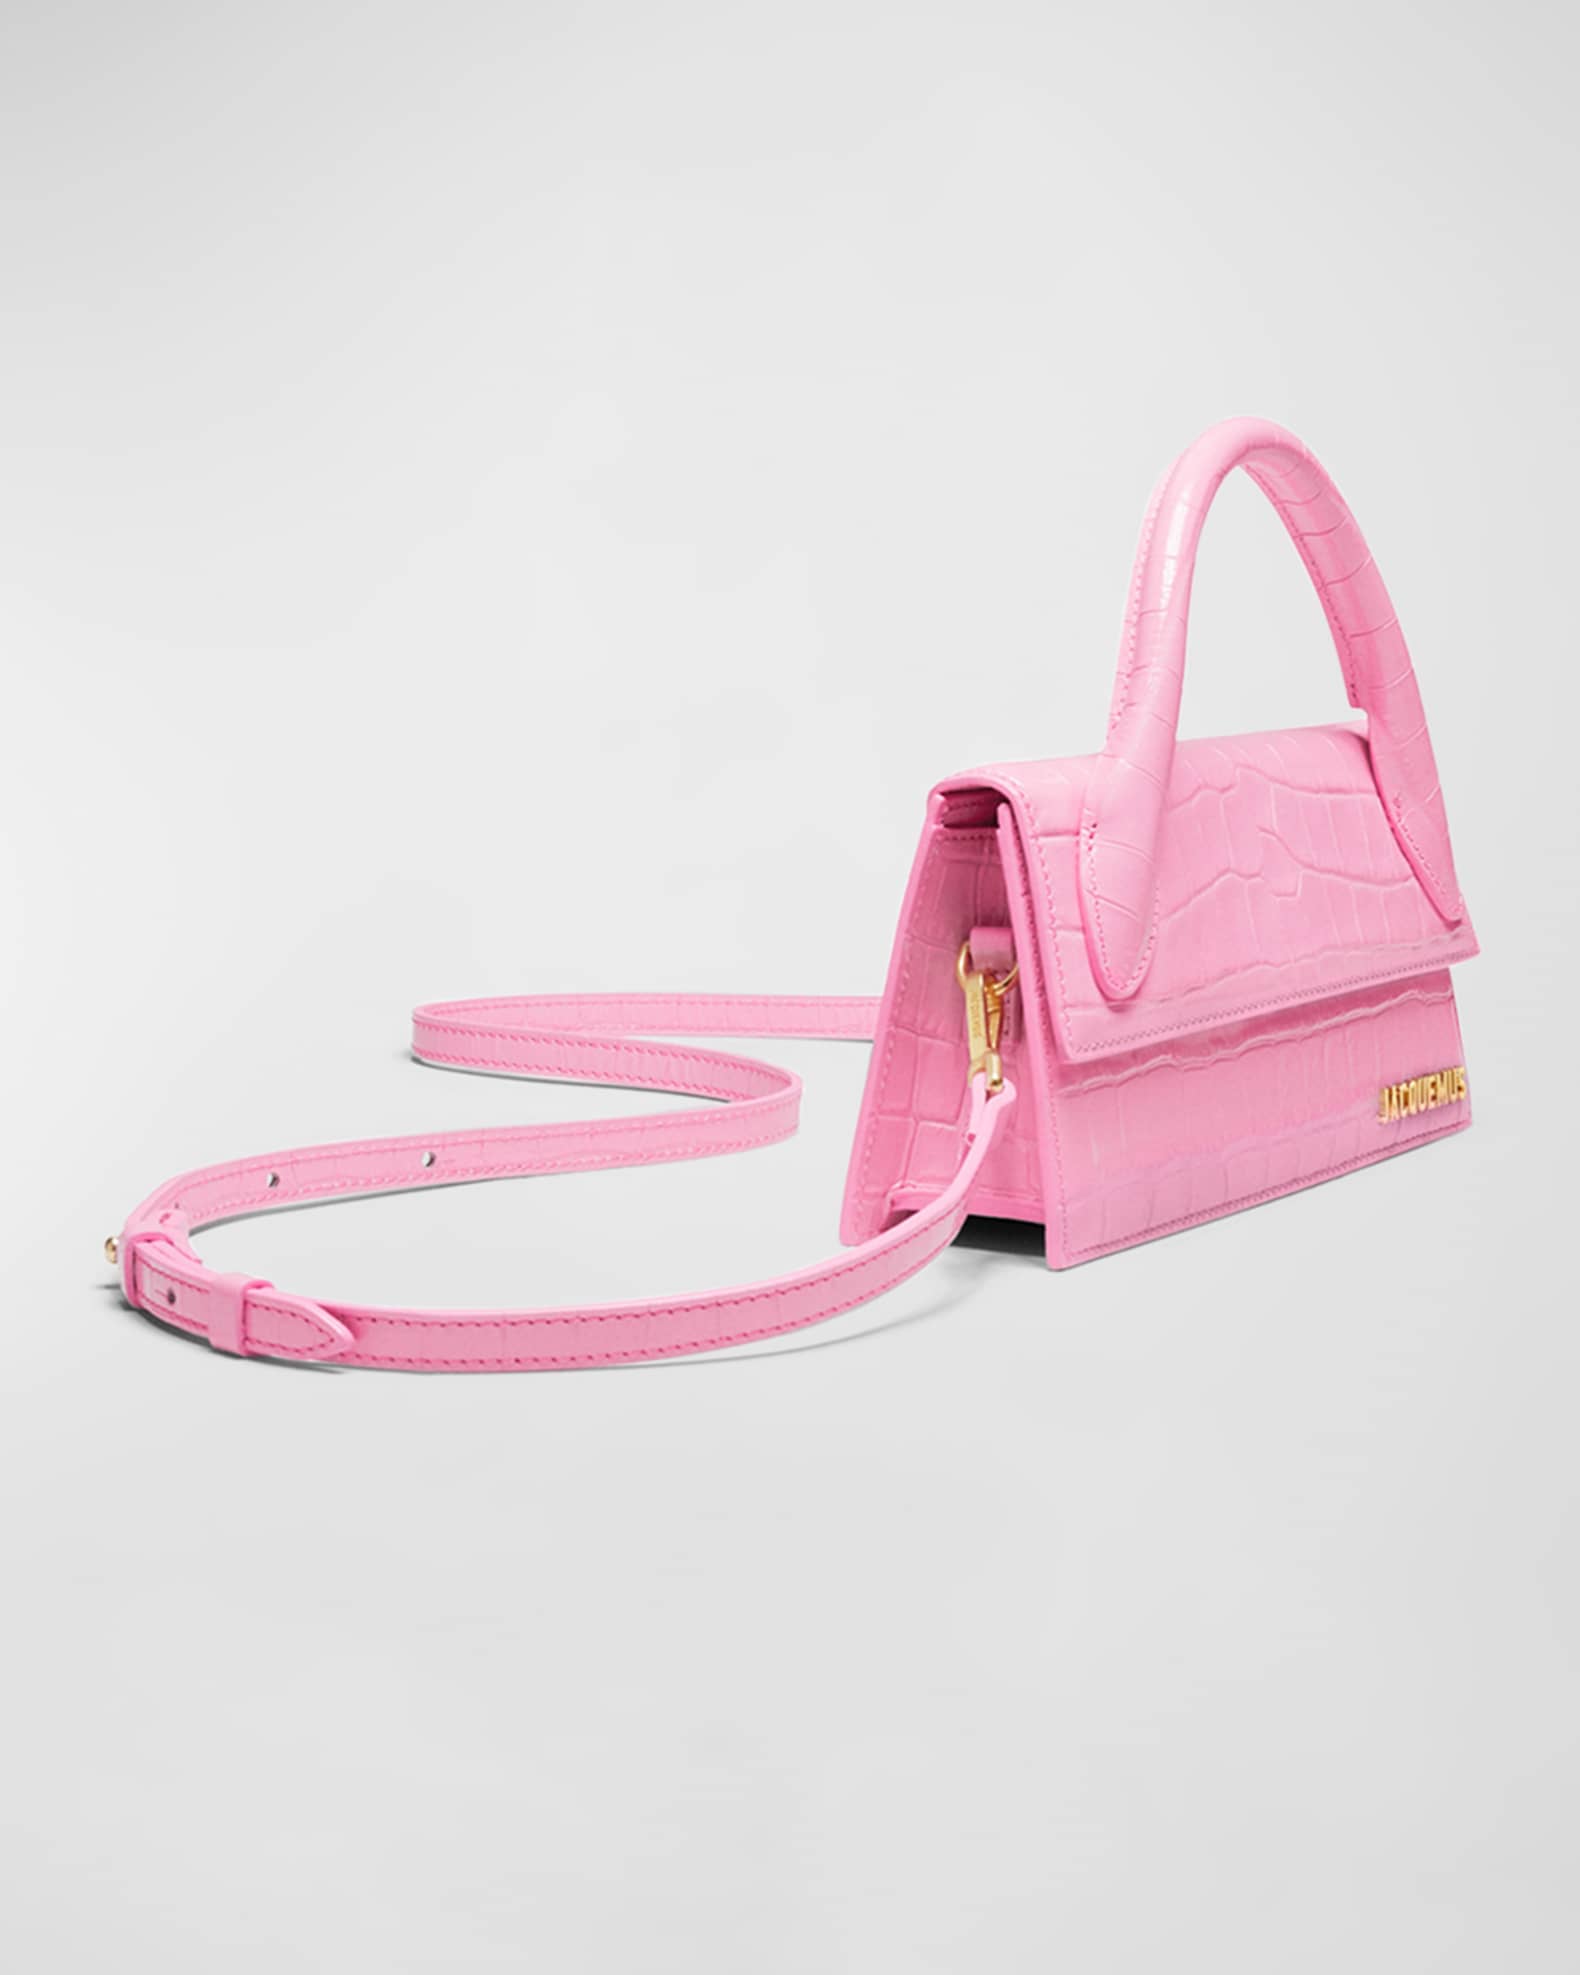 Jacquemus Le Chiquito Long Croc-Embossed Top-Handle Bag, Pink, Women's, Handbags & Purses Top Handle Bags